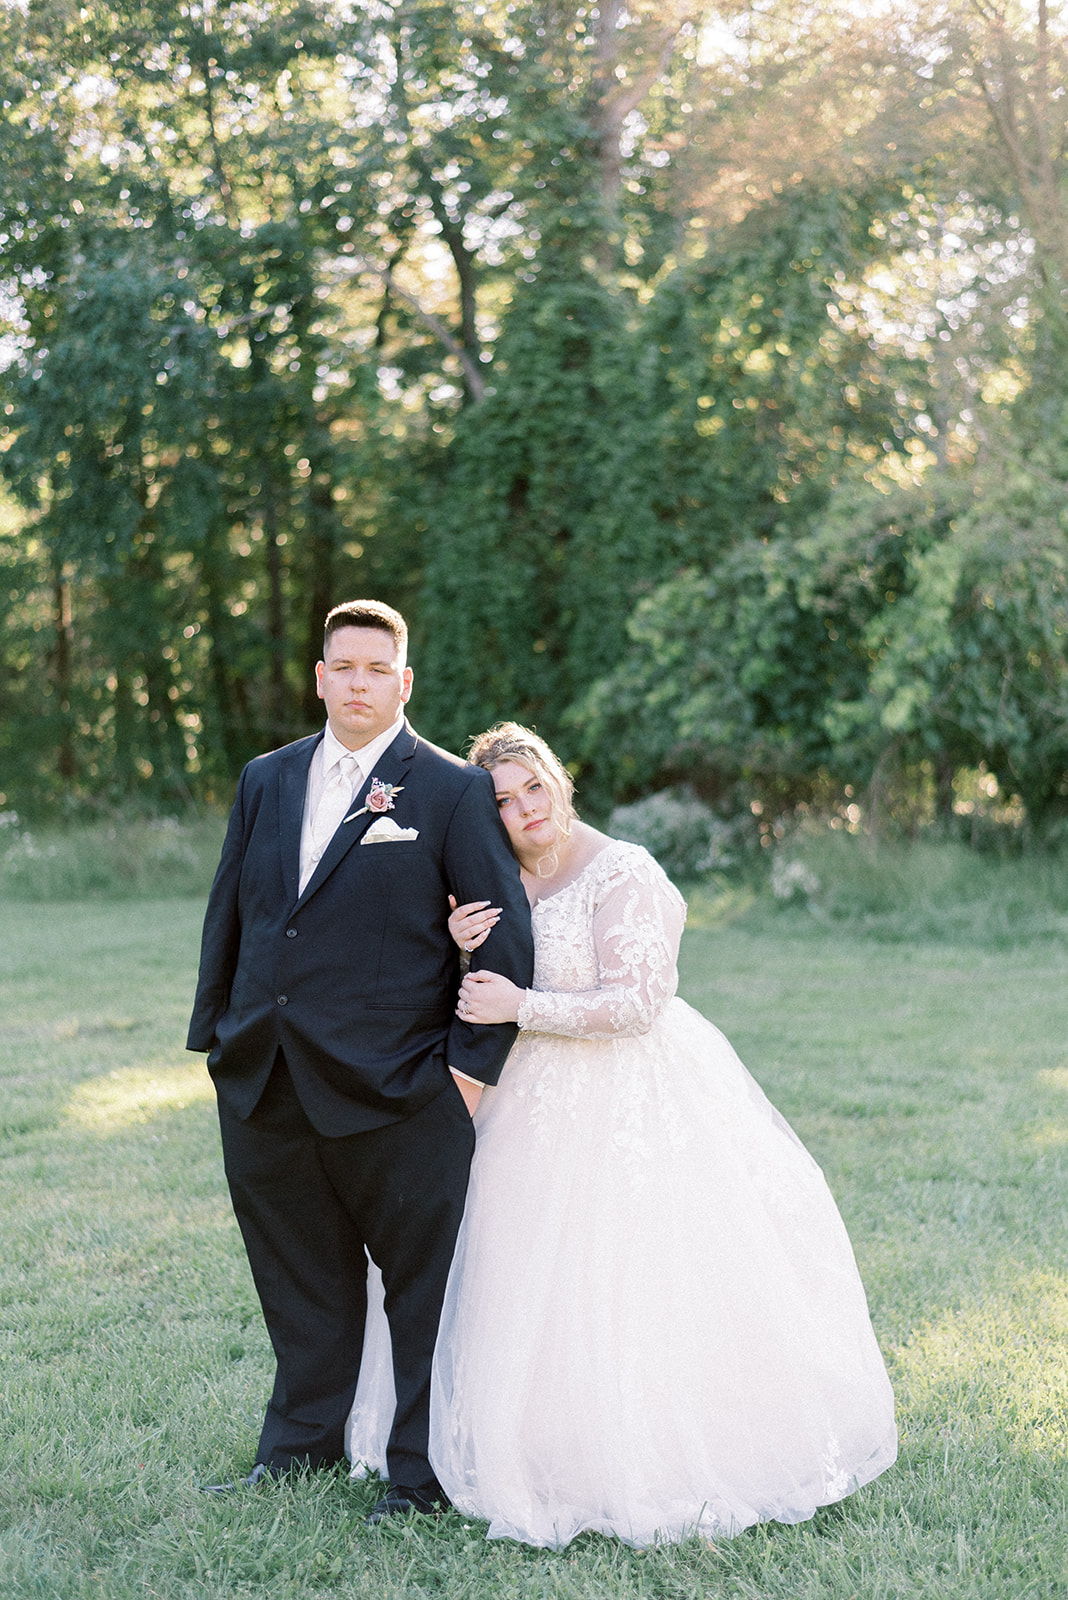 Pennsylvania wedding photographer captures bride leaning on groom's arm